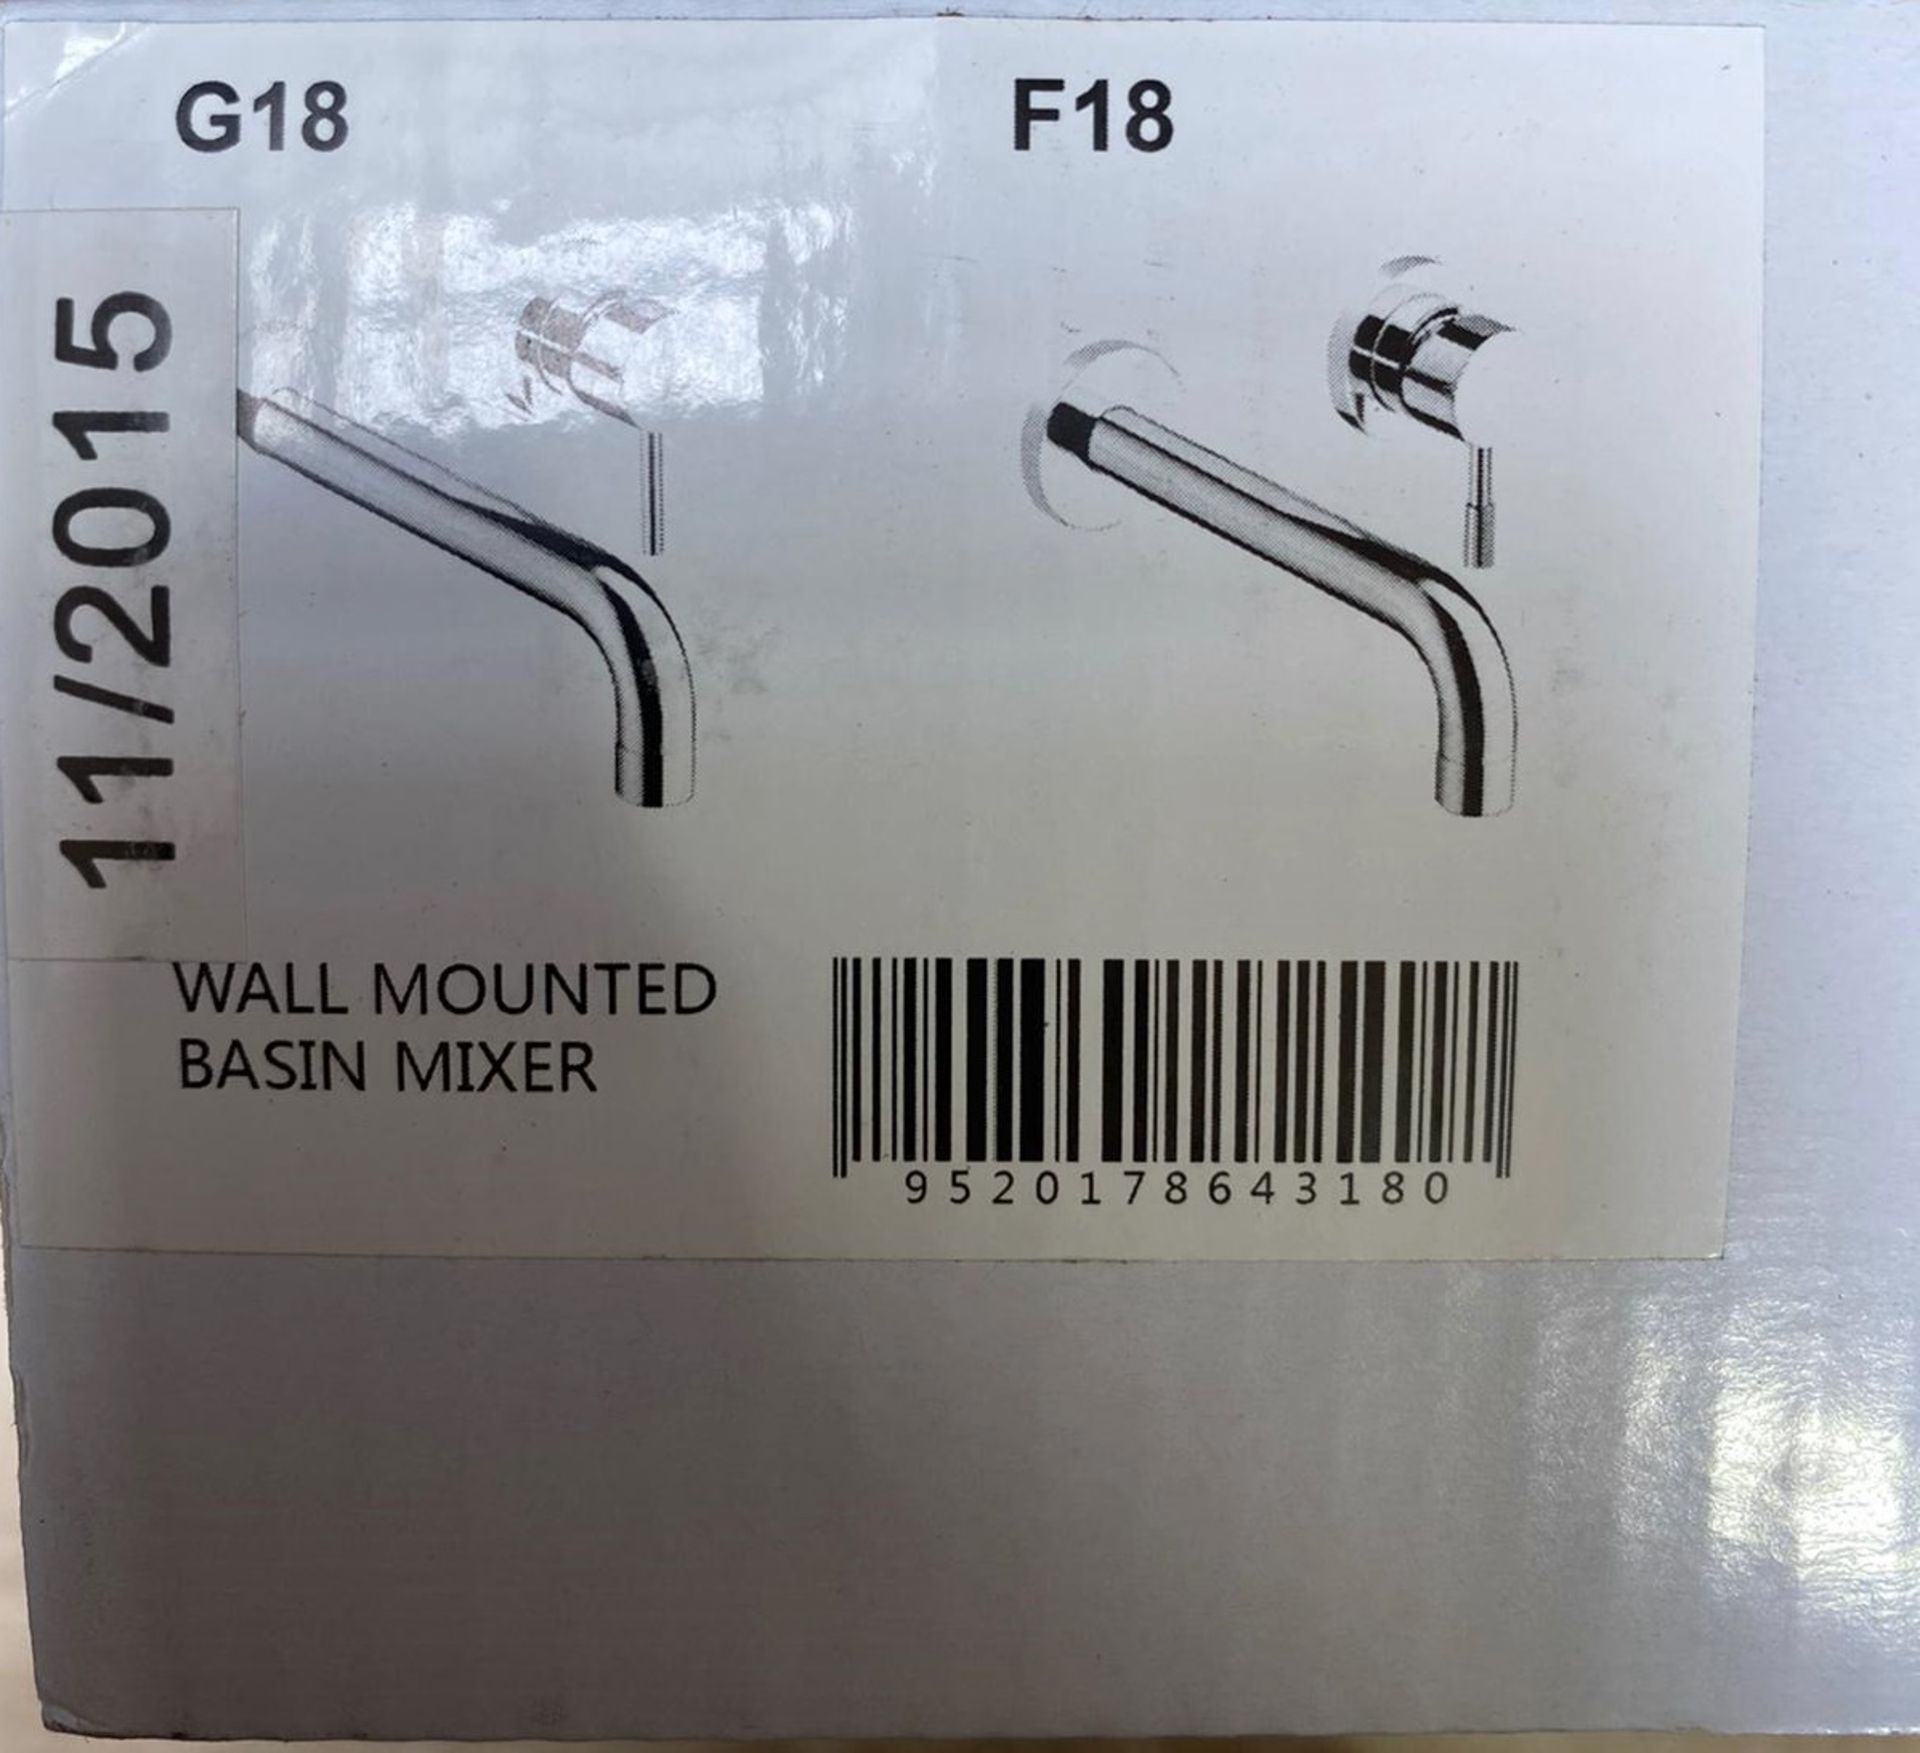 1 x Synergy Wall Mounted Basin Mixer G18/F18 - New Boxed Stock - Location: Altrincham WA14 - - Image 2 of 3